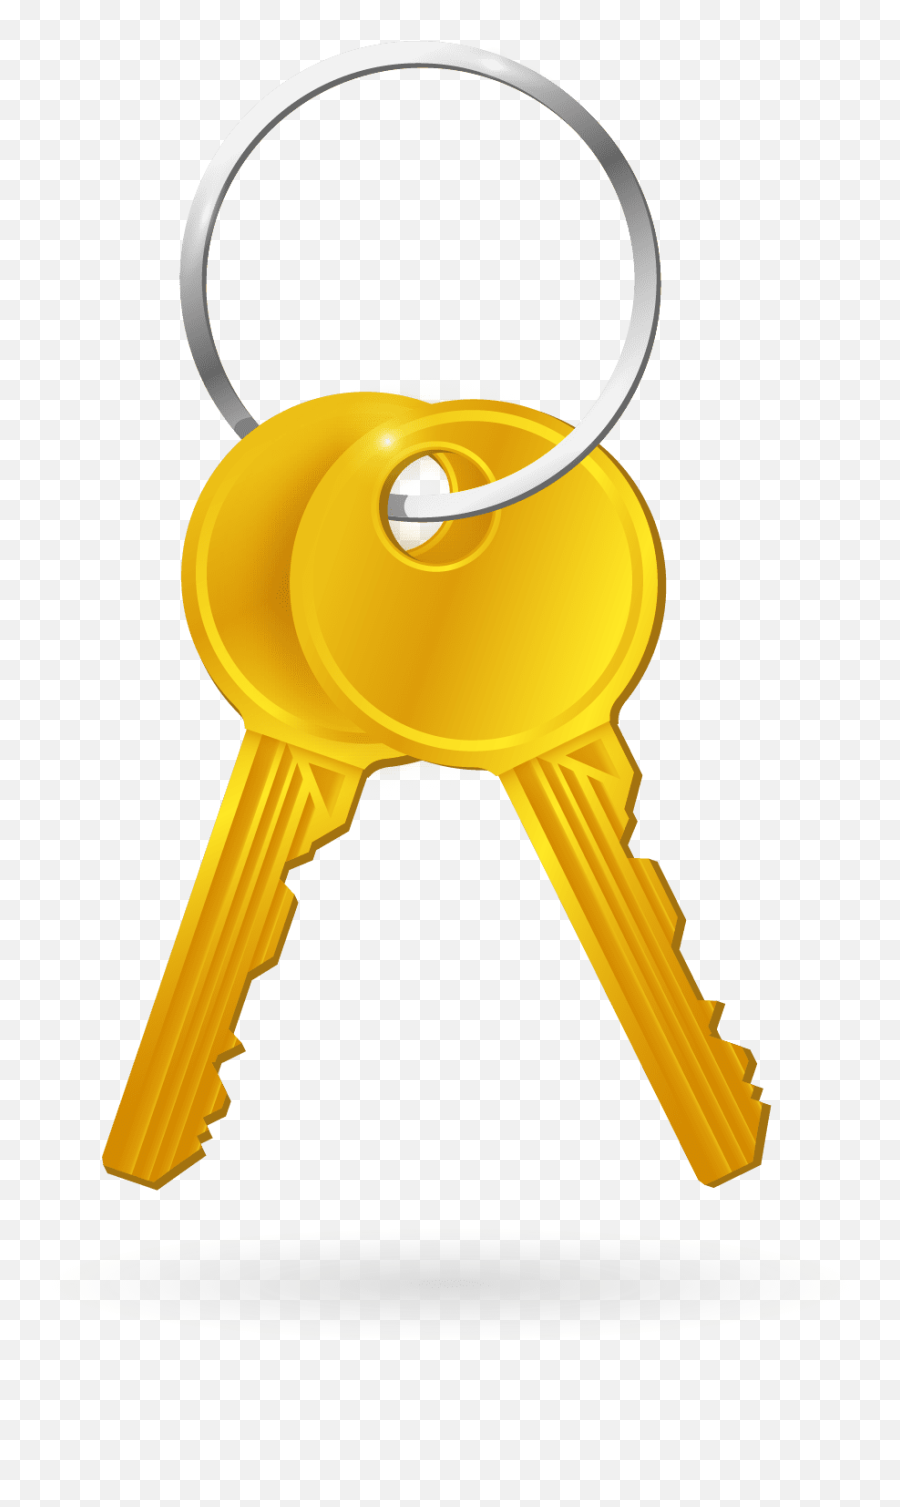 Downloads - Parrot Digital Marketing Desenho De Chave Freepik Png,Gold Key Icon